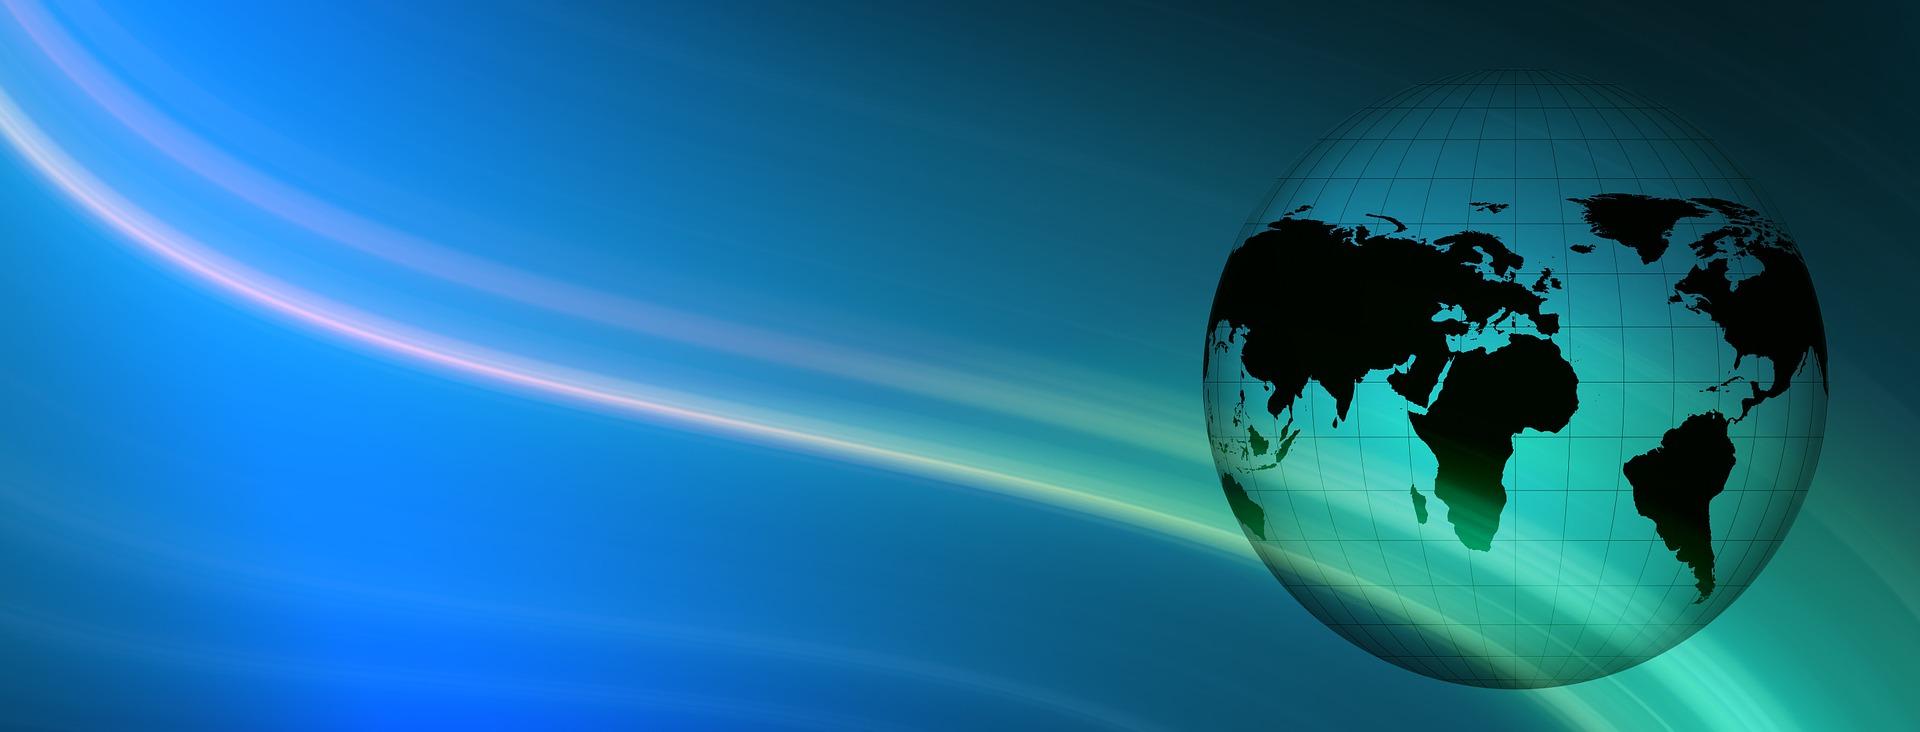 Globe on a blue background